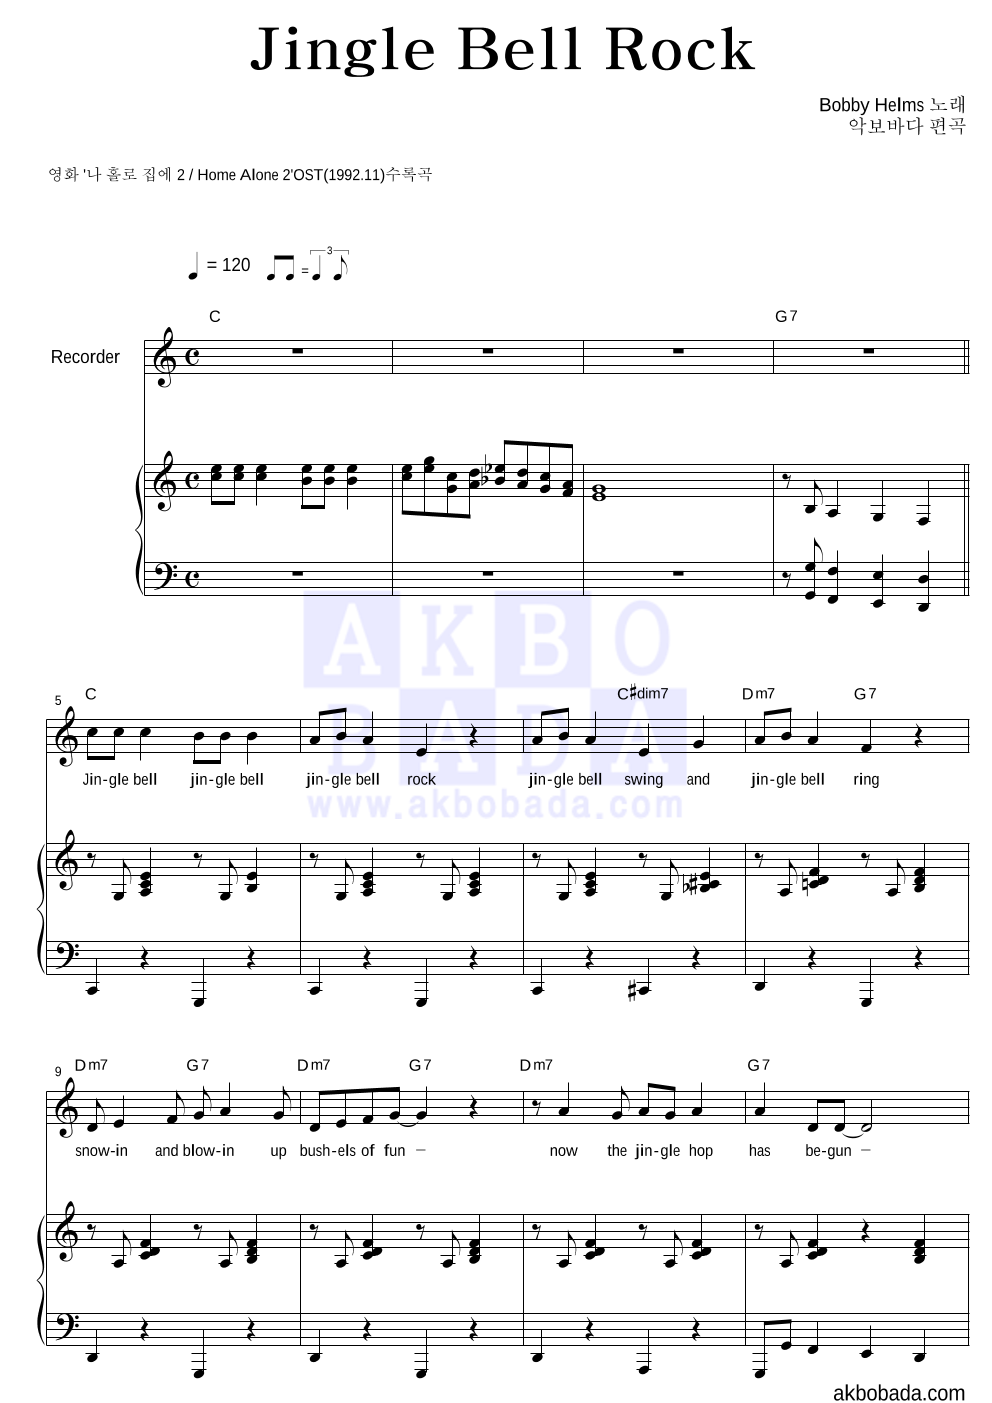 Bobby Helms - Jingle Bell Rock 리코더&피아노 악보 